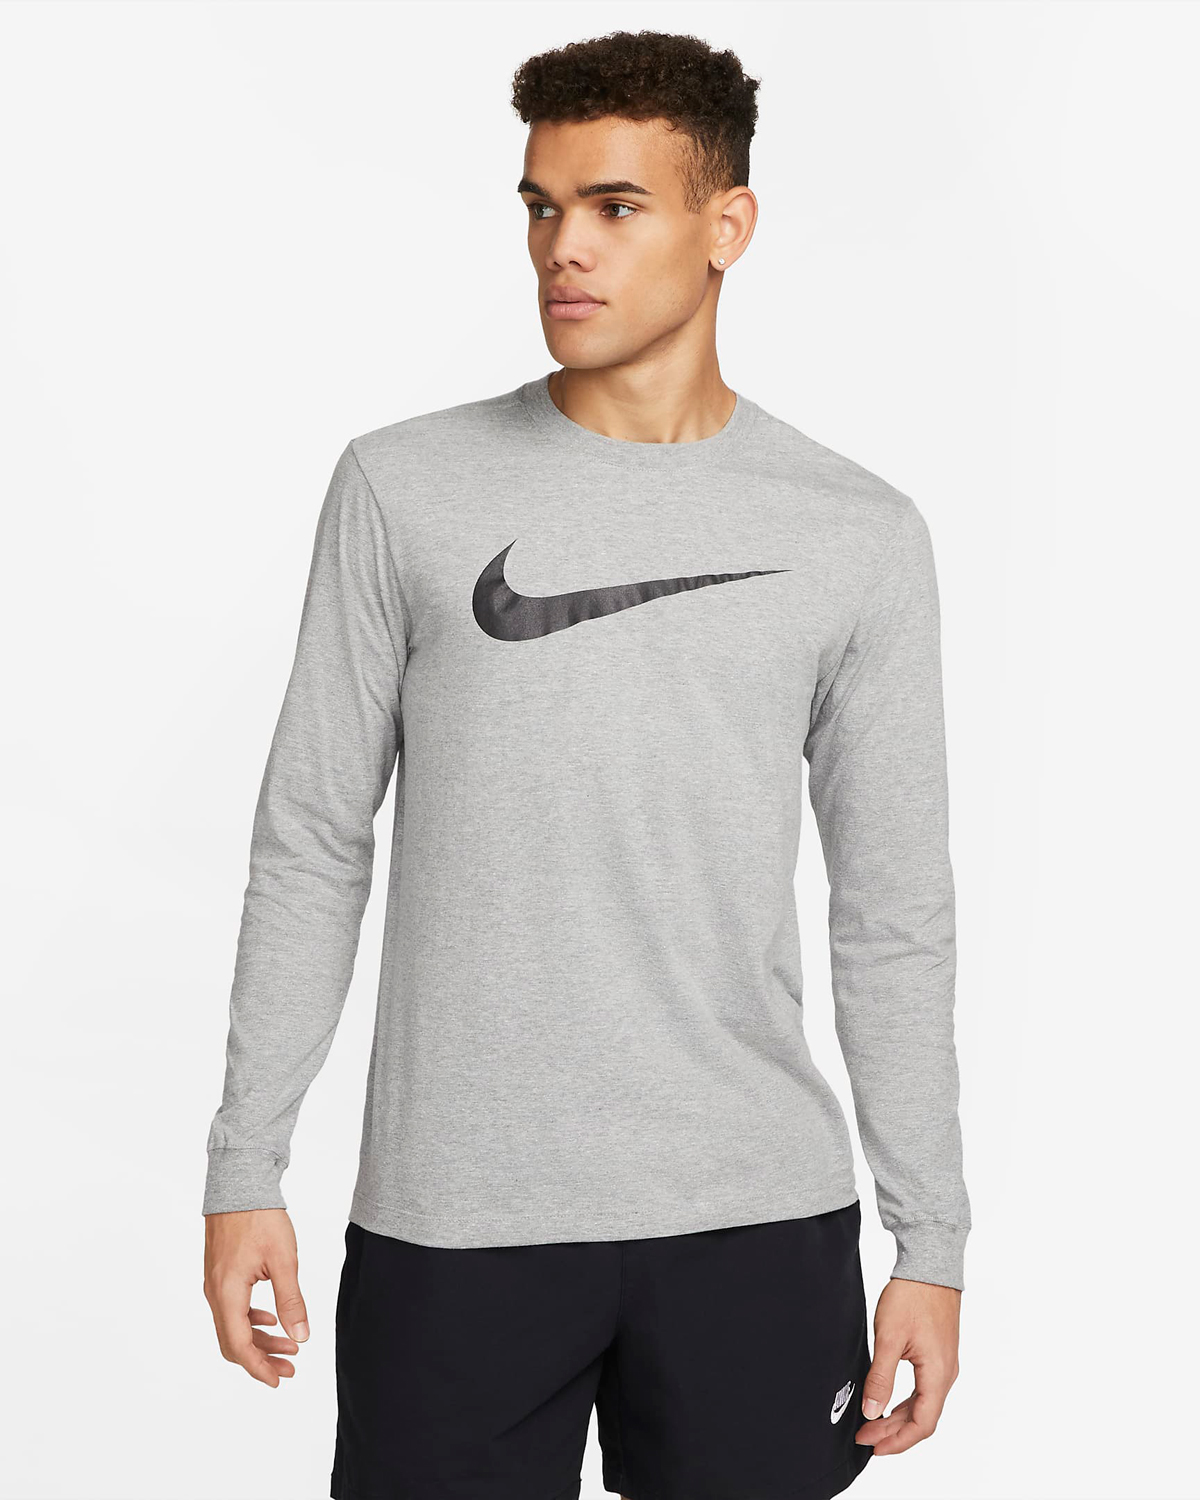 Nike-Sportswear-Long-Sleeve-T-Shirt-Grey-Black